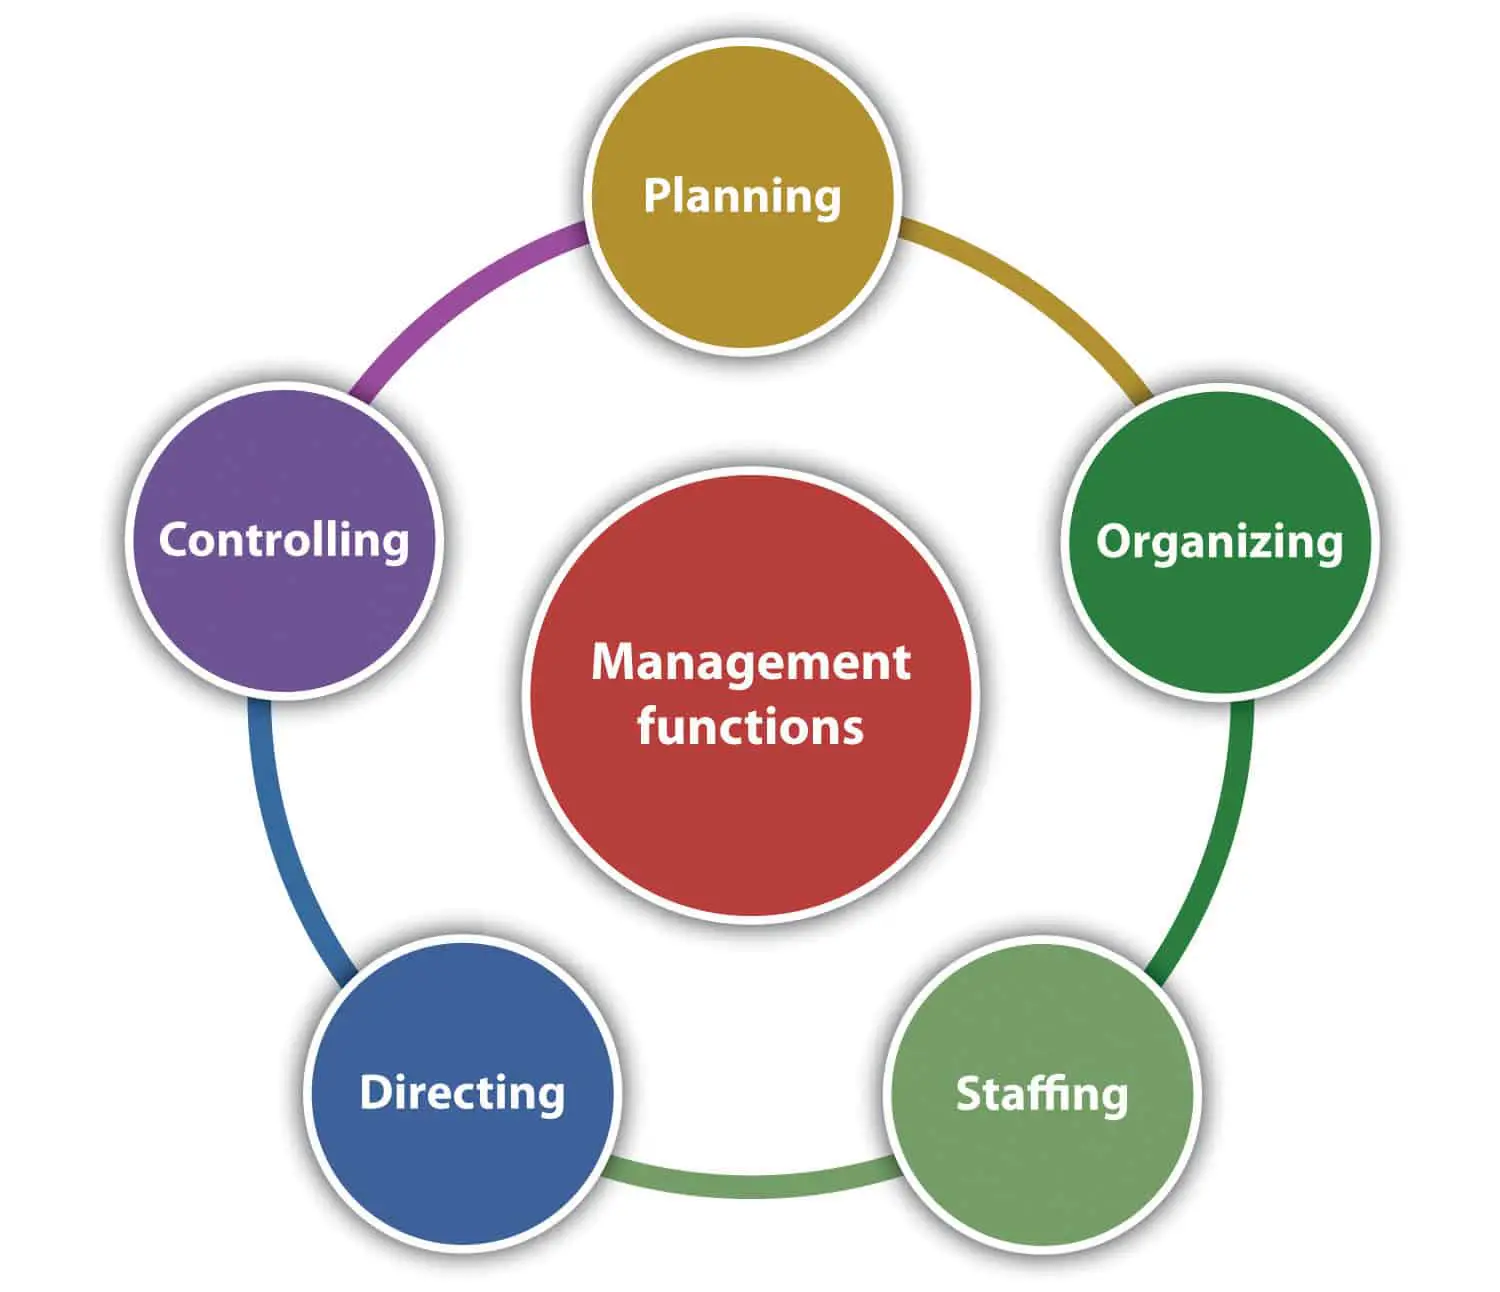 The Organizational Process